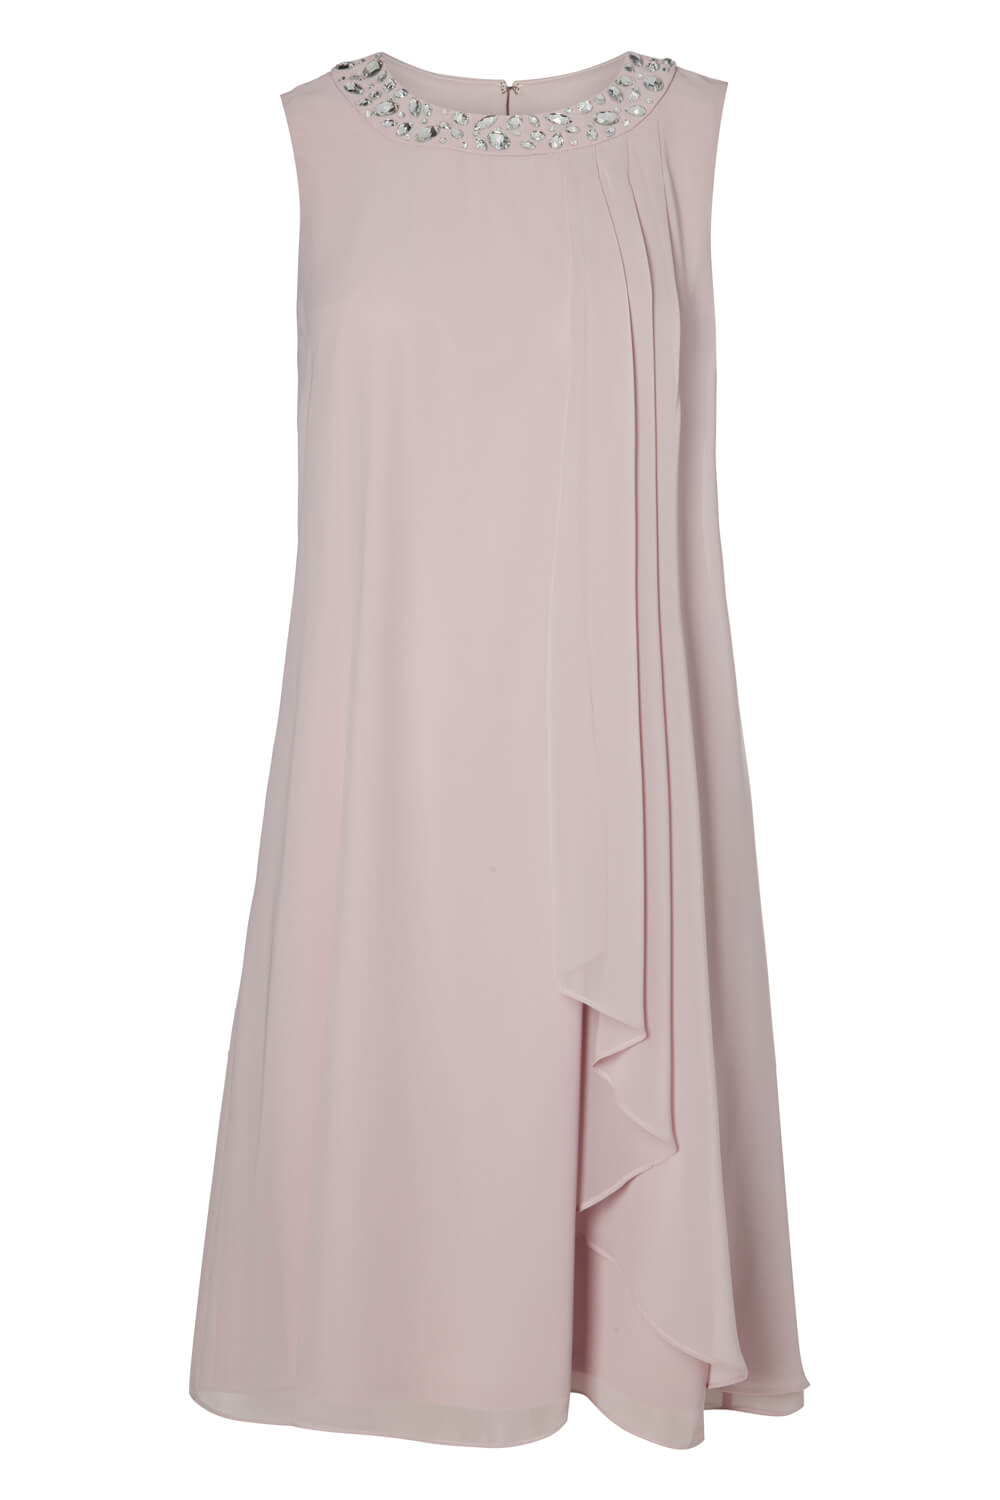 Light Pink Embellished Neck Chiffon Dress, Image 5 of 5